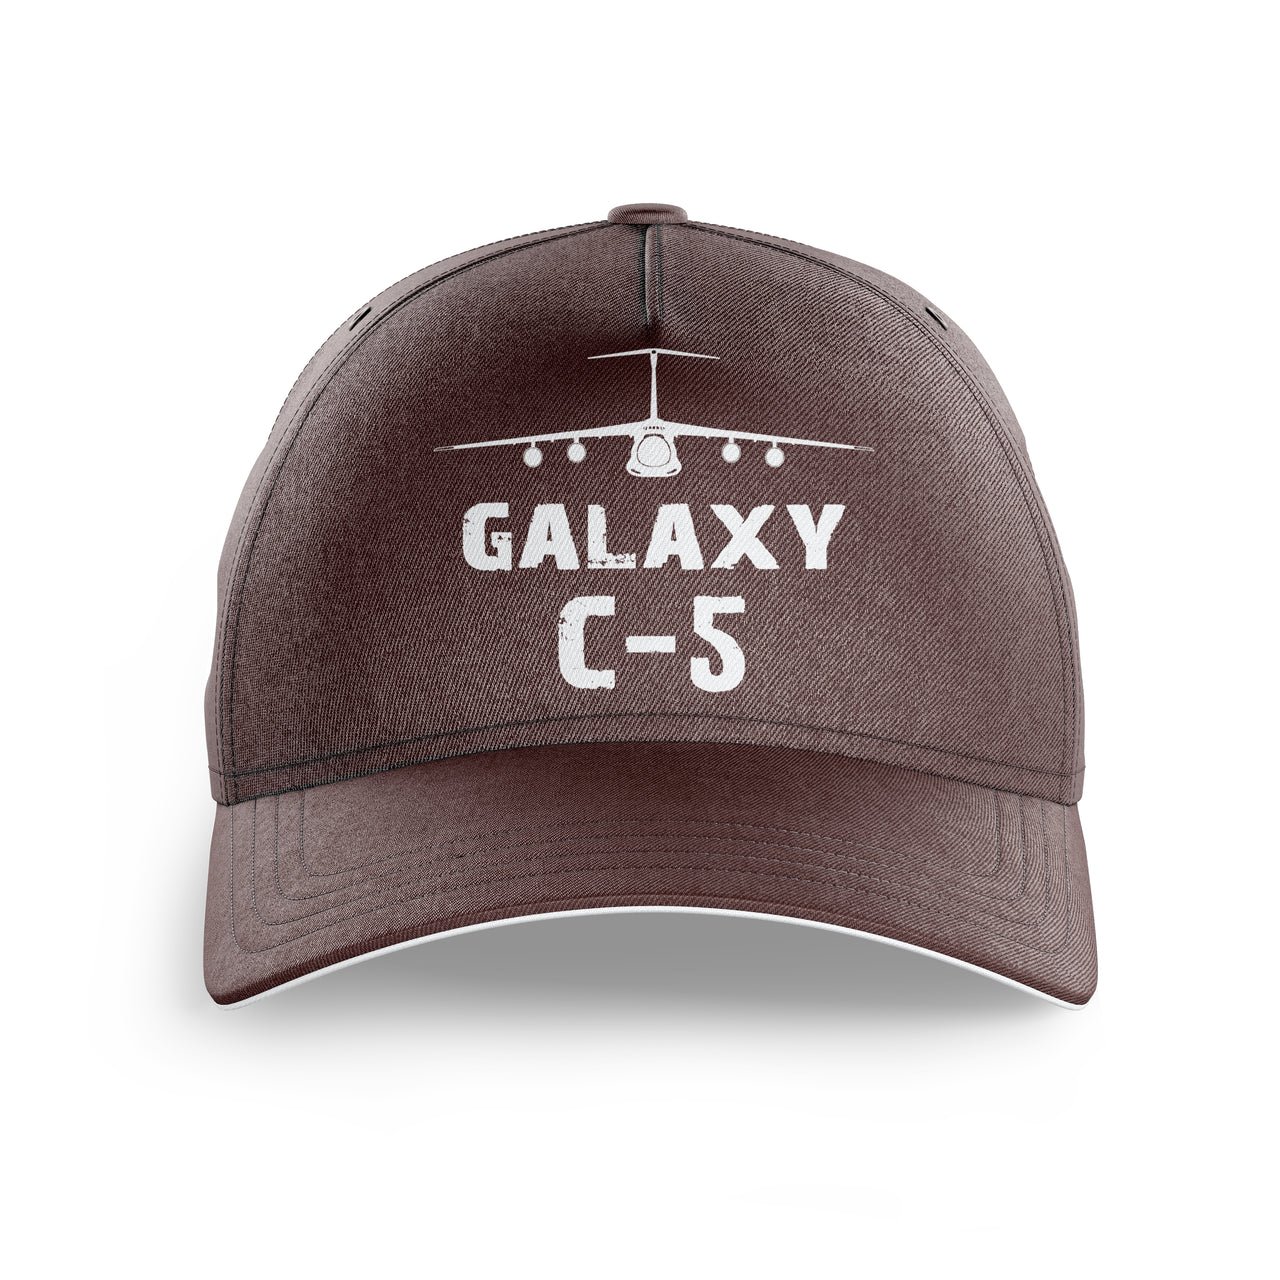 Galaxy C-5 & Plane Printed Hats